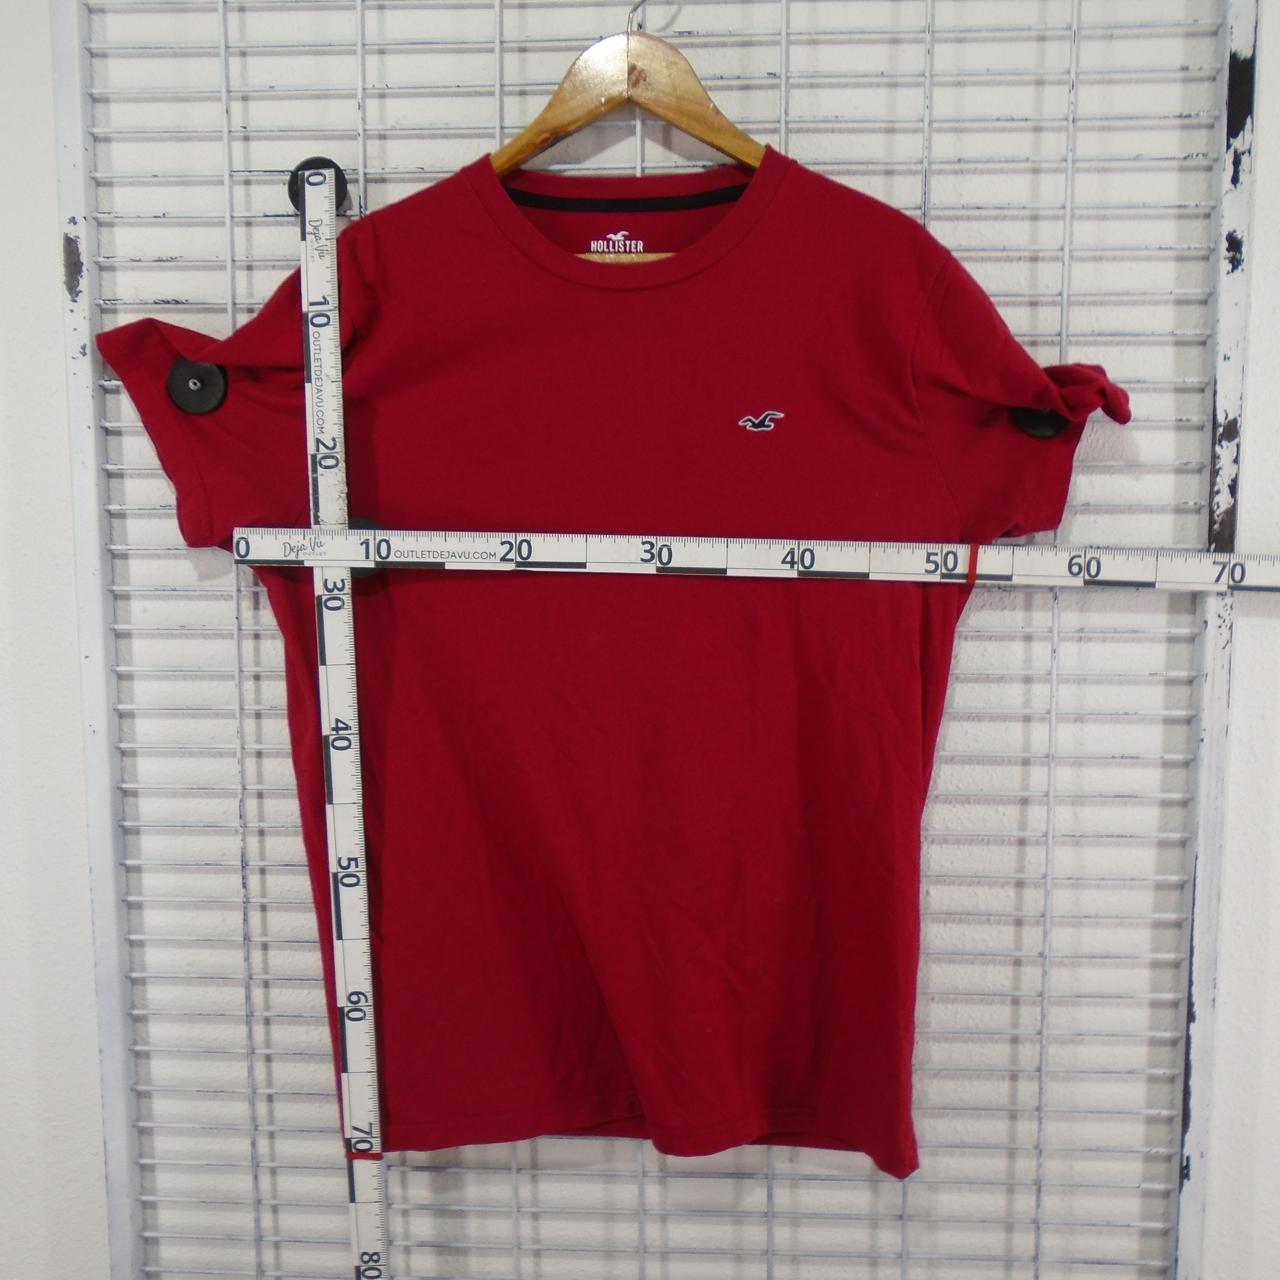 Camiseta Hombre Hollister. Rojo. L. Usado. Bien